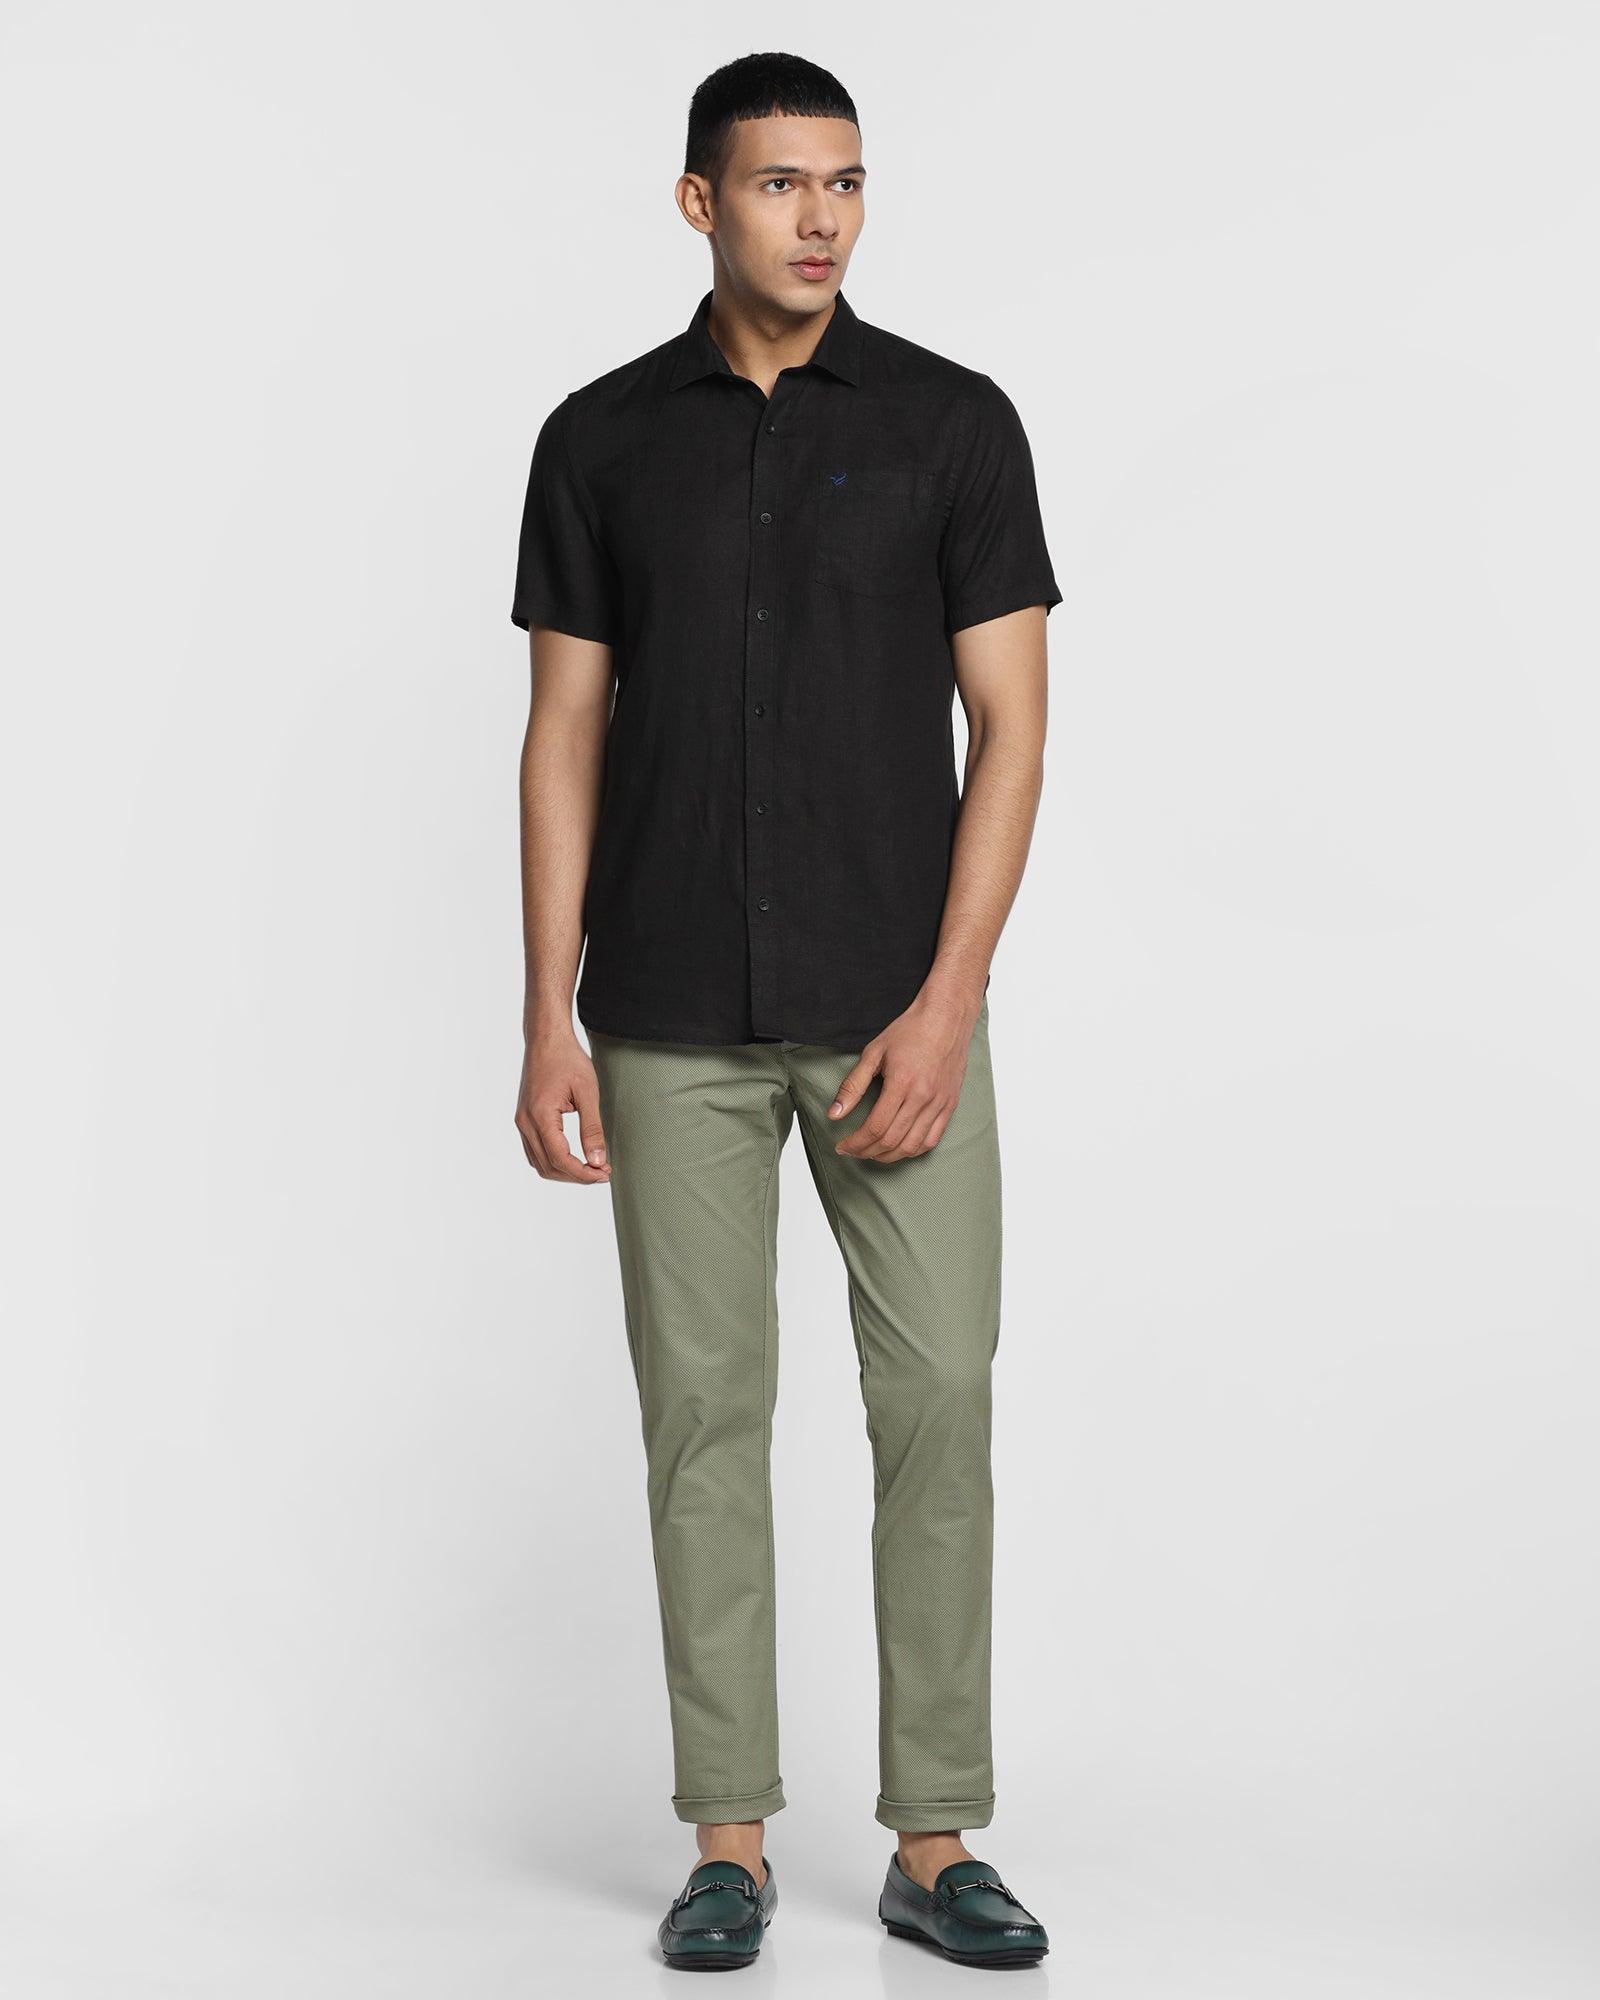 Linen Formal Half Sleeve Black Solid Shirt - Bowen